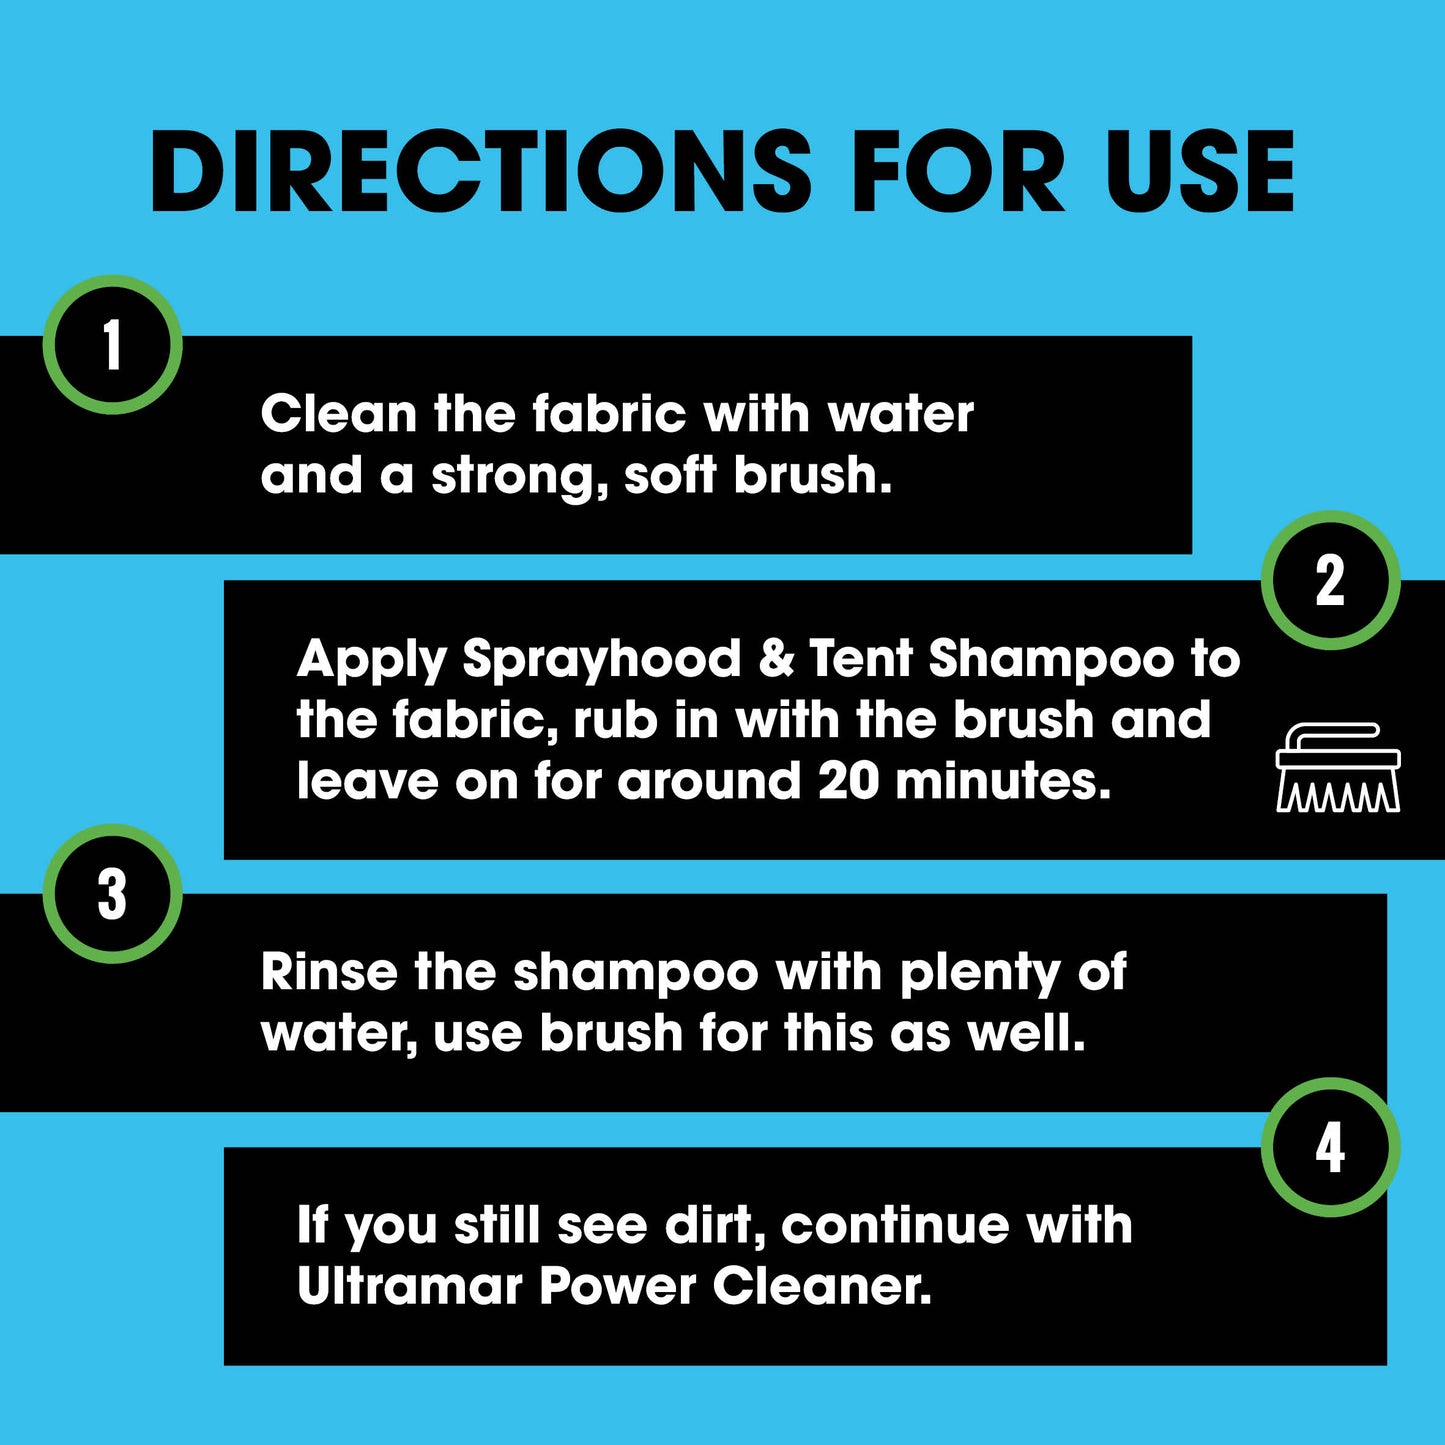 Tuchreiniger: Sprayhood & Tent Shampoo